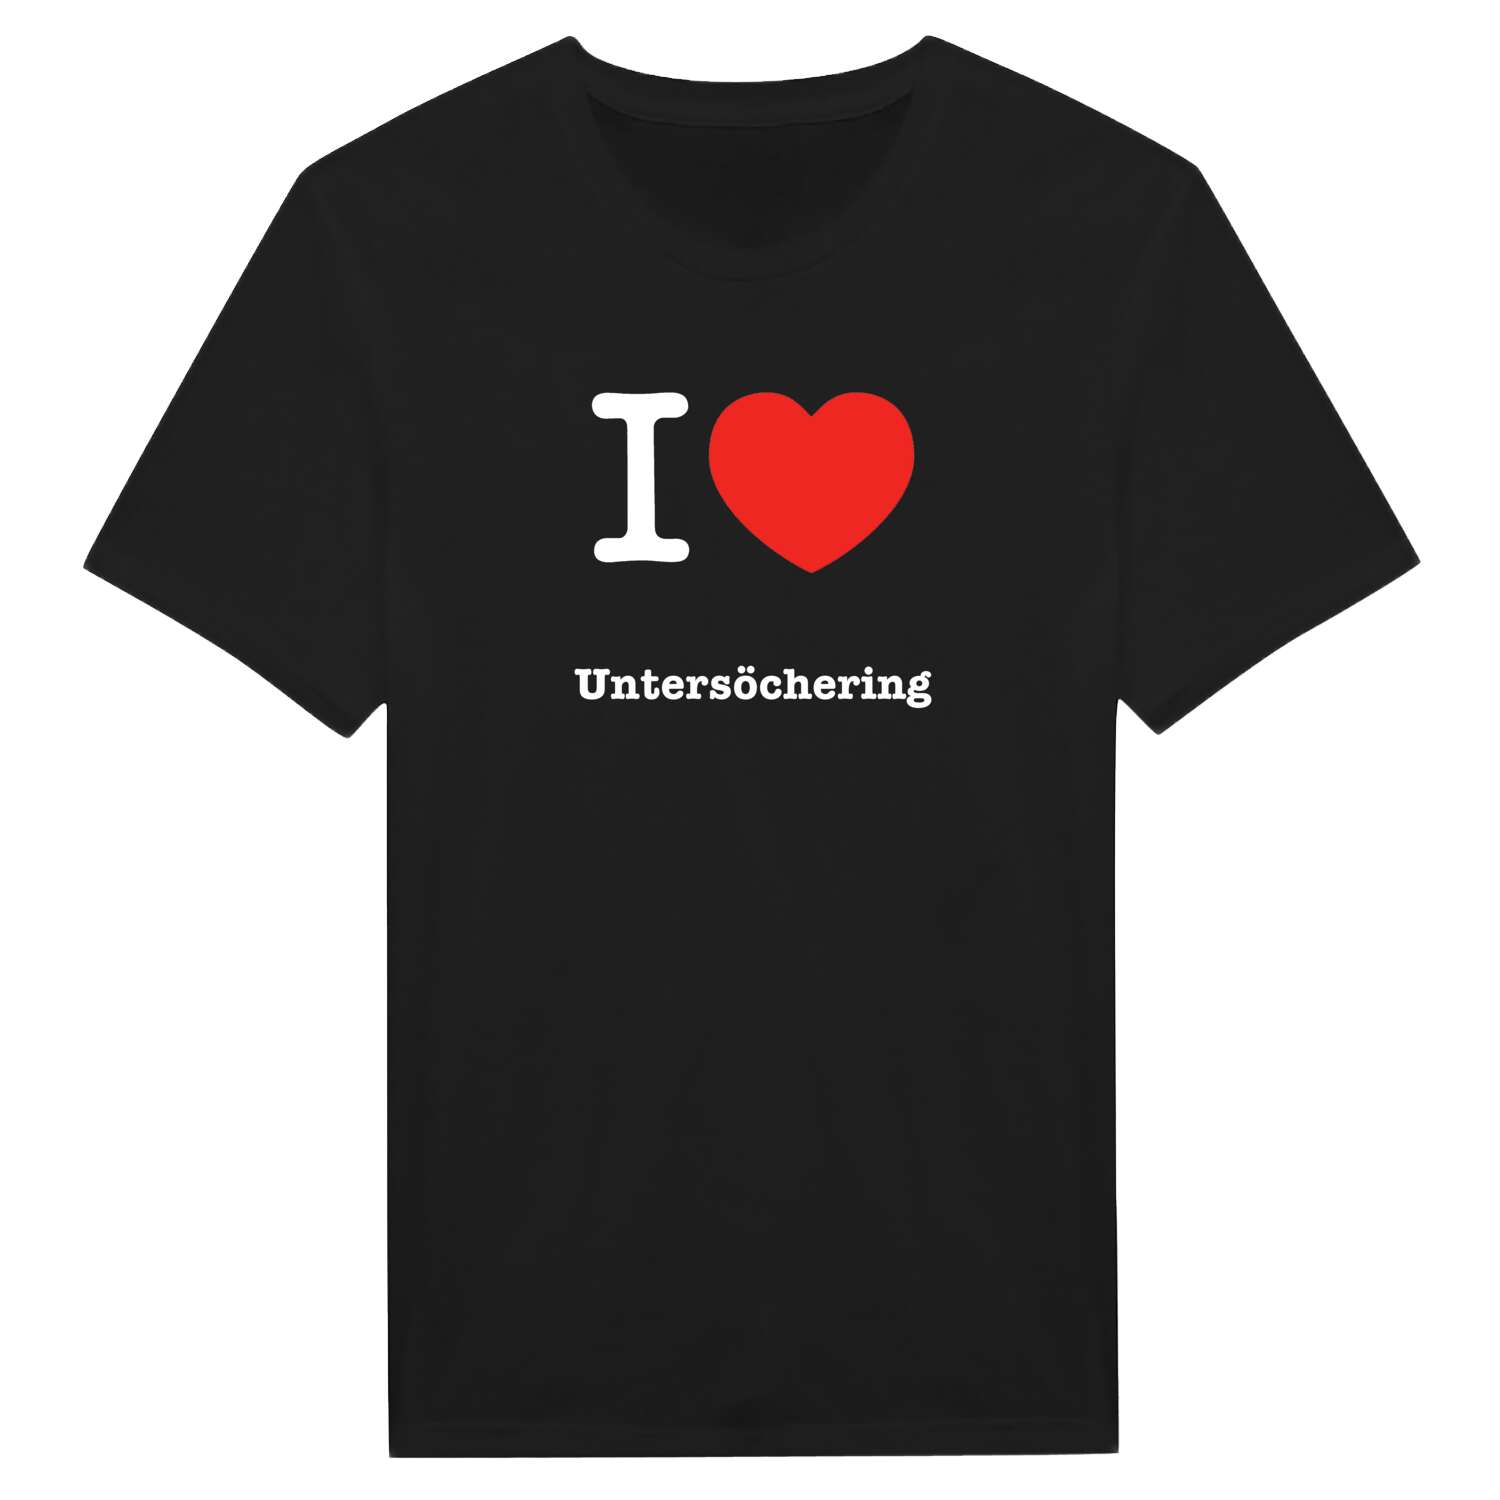 Untersöchering T-Shirt »I love«